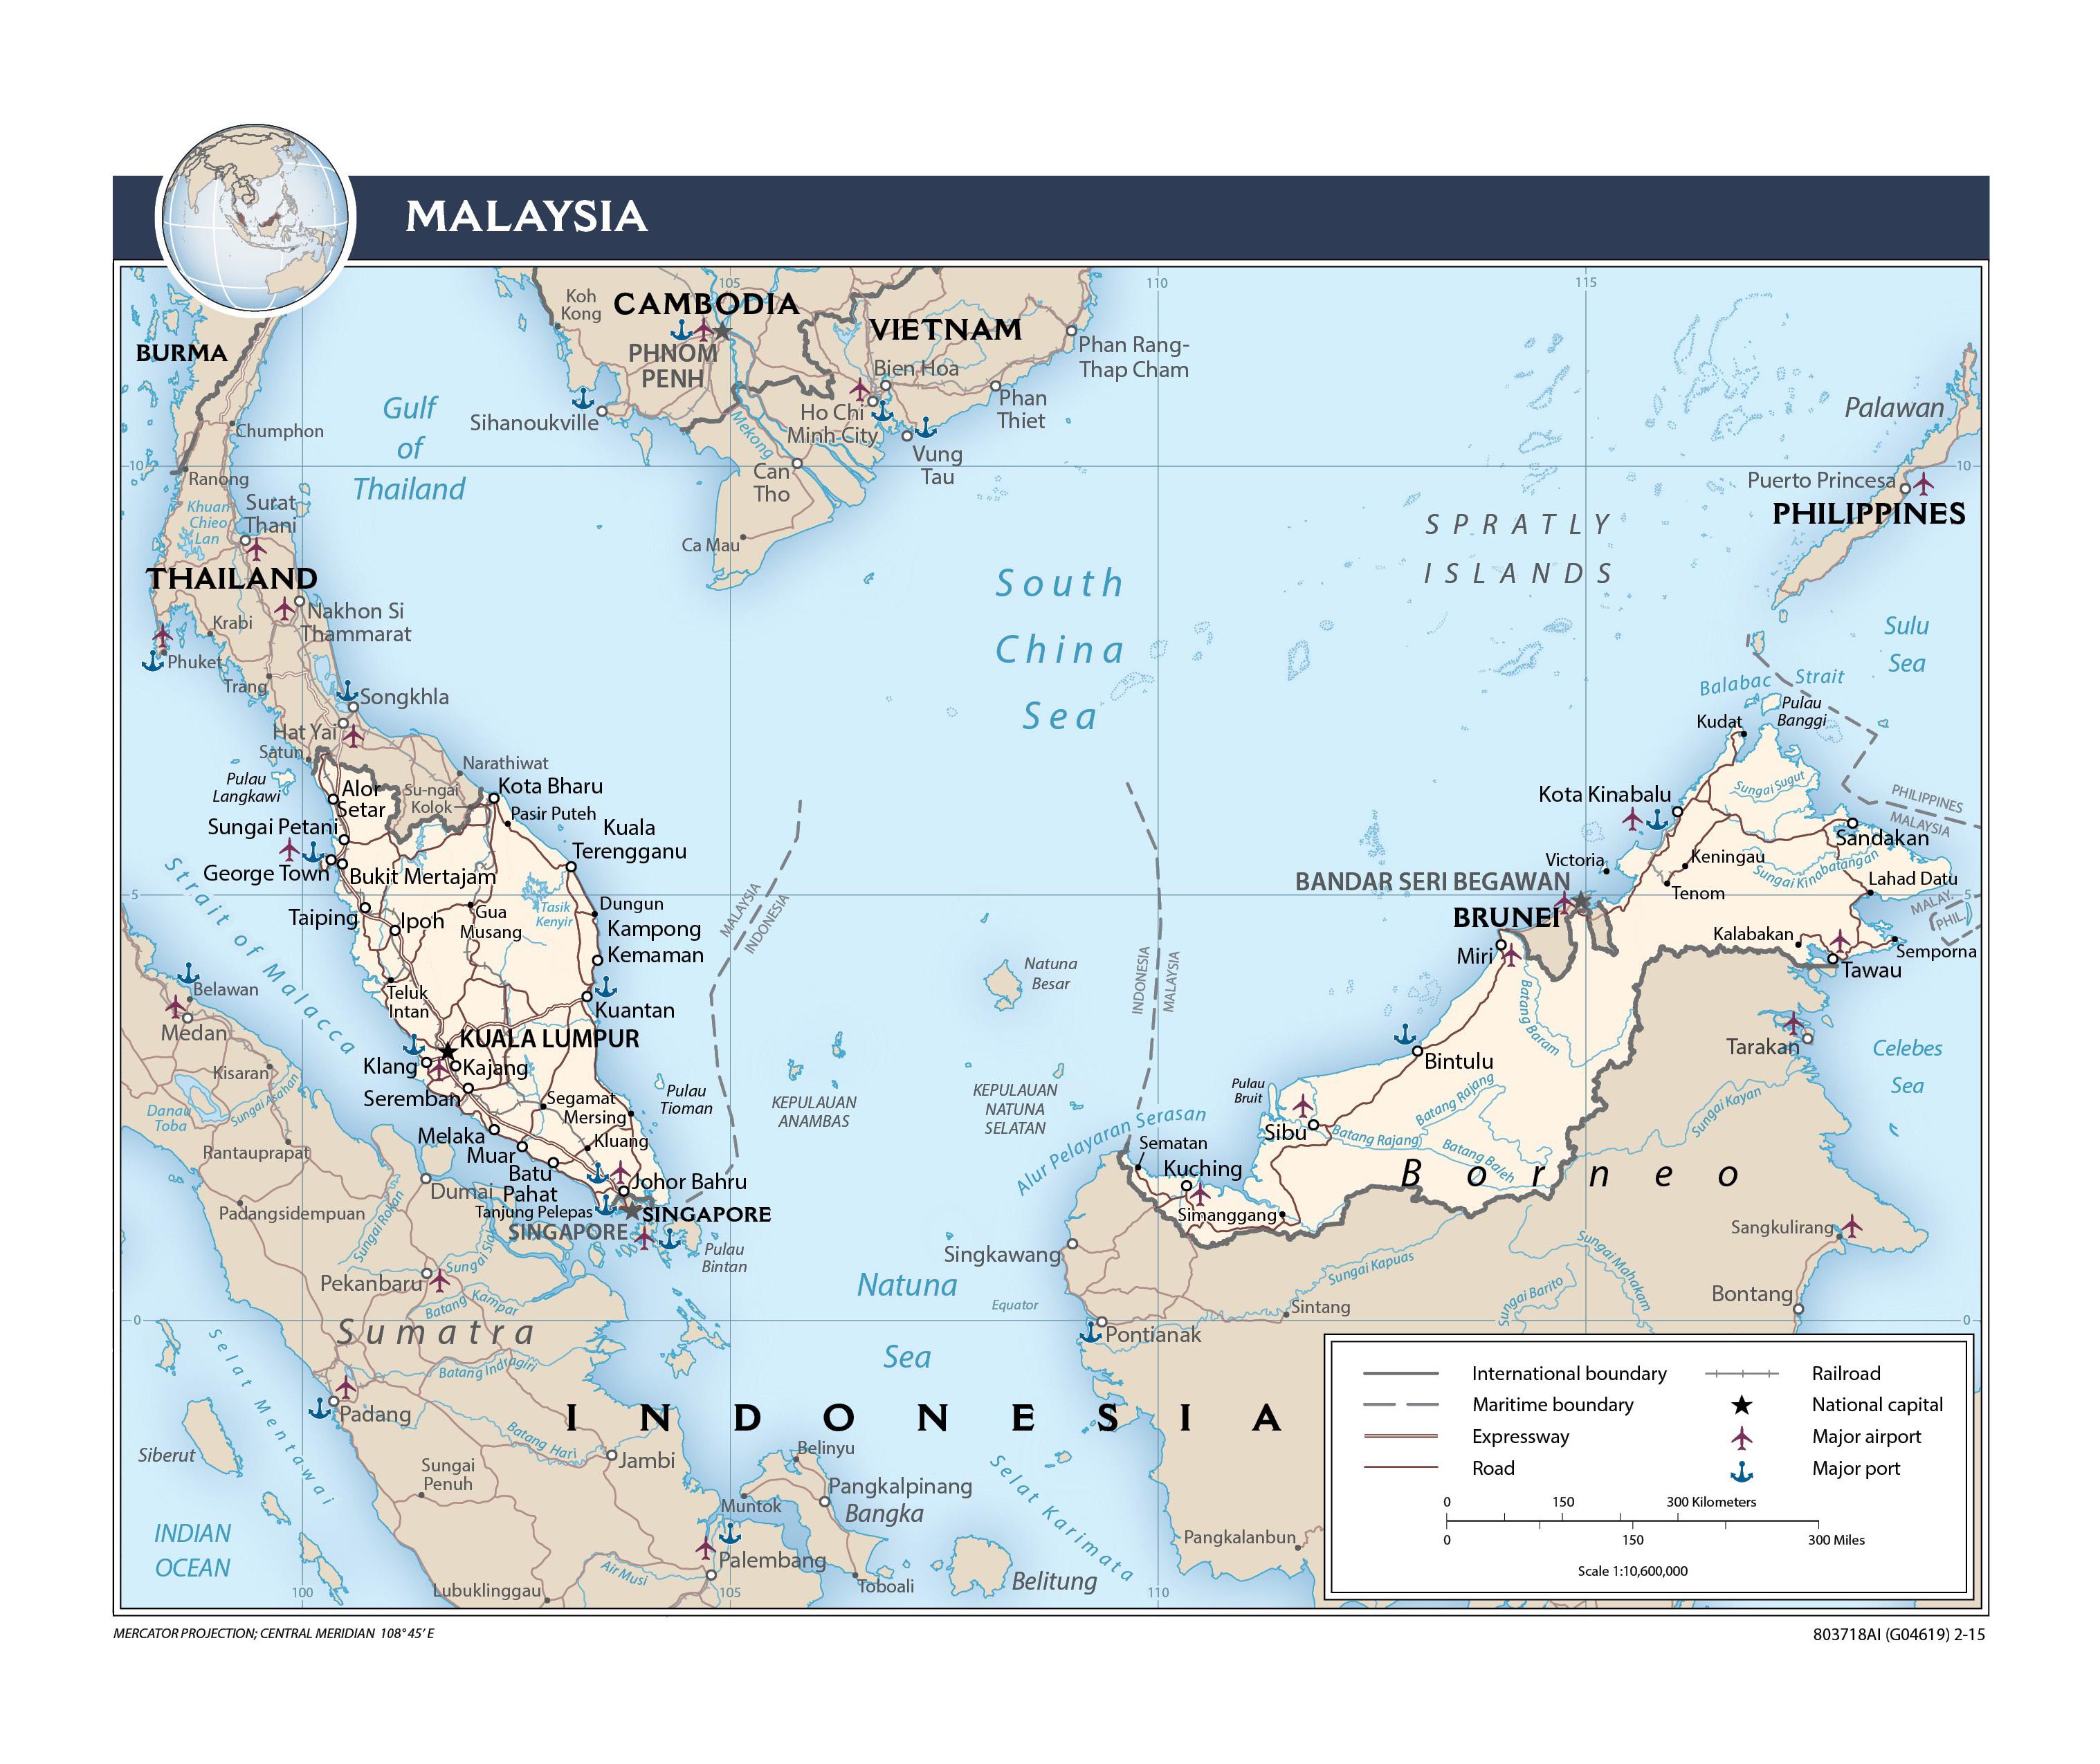 Malaysia Airports Map 